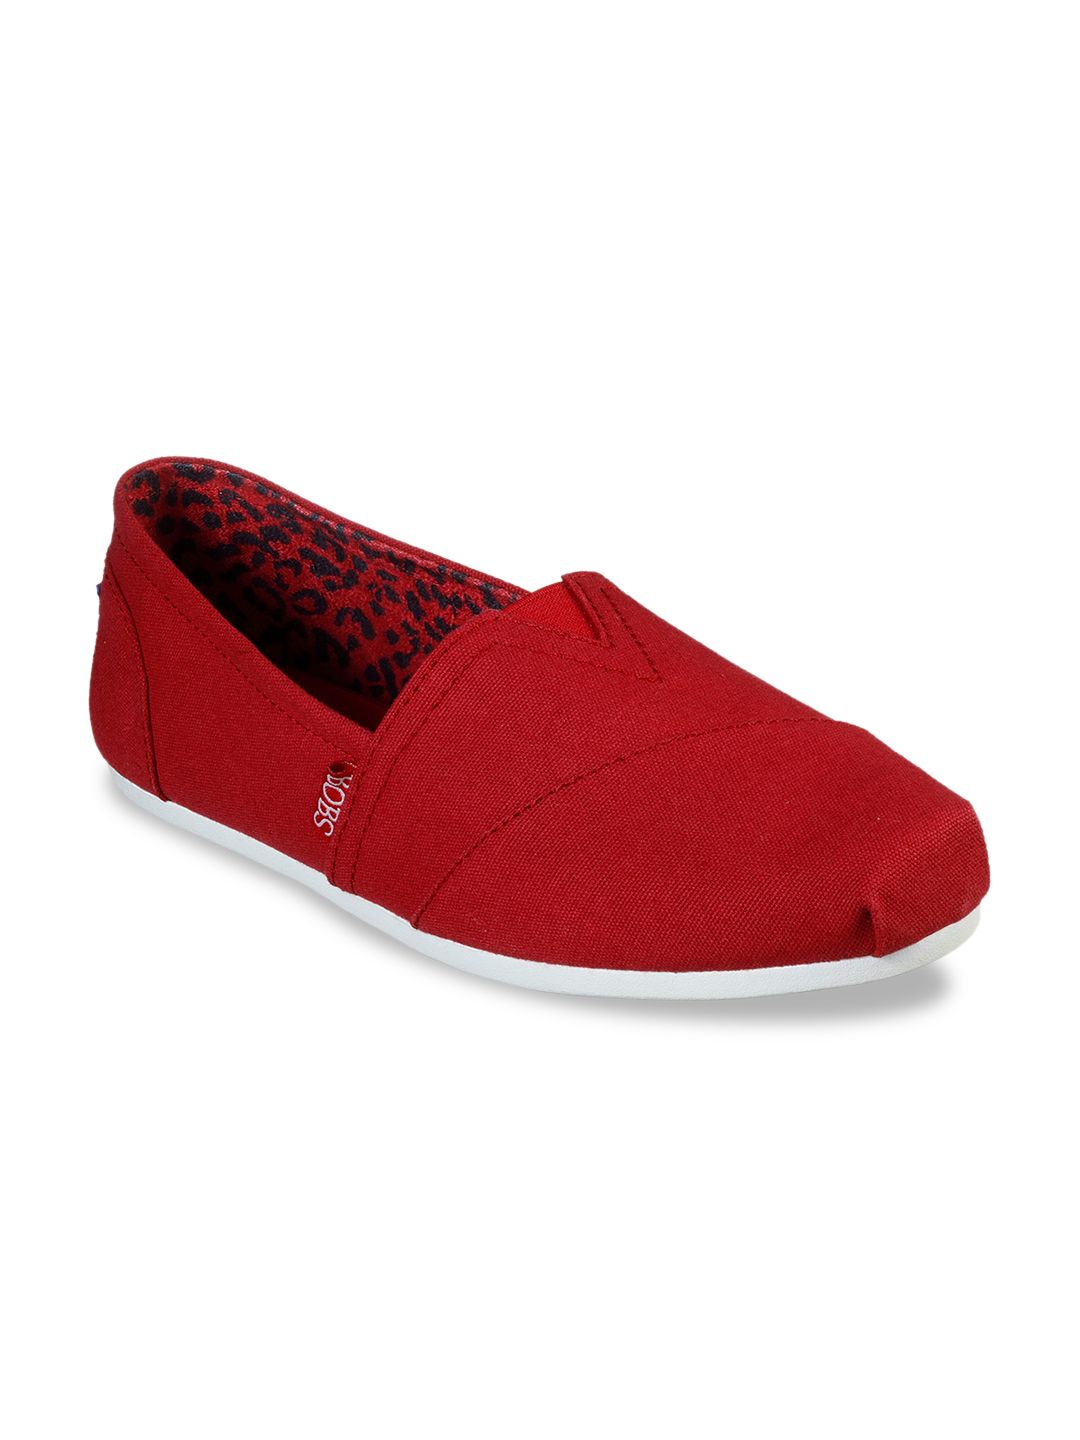 Skechers Women Red Textured Slip-On Sneakers Price in India